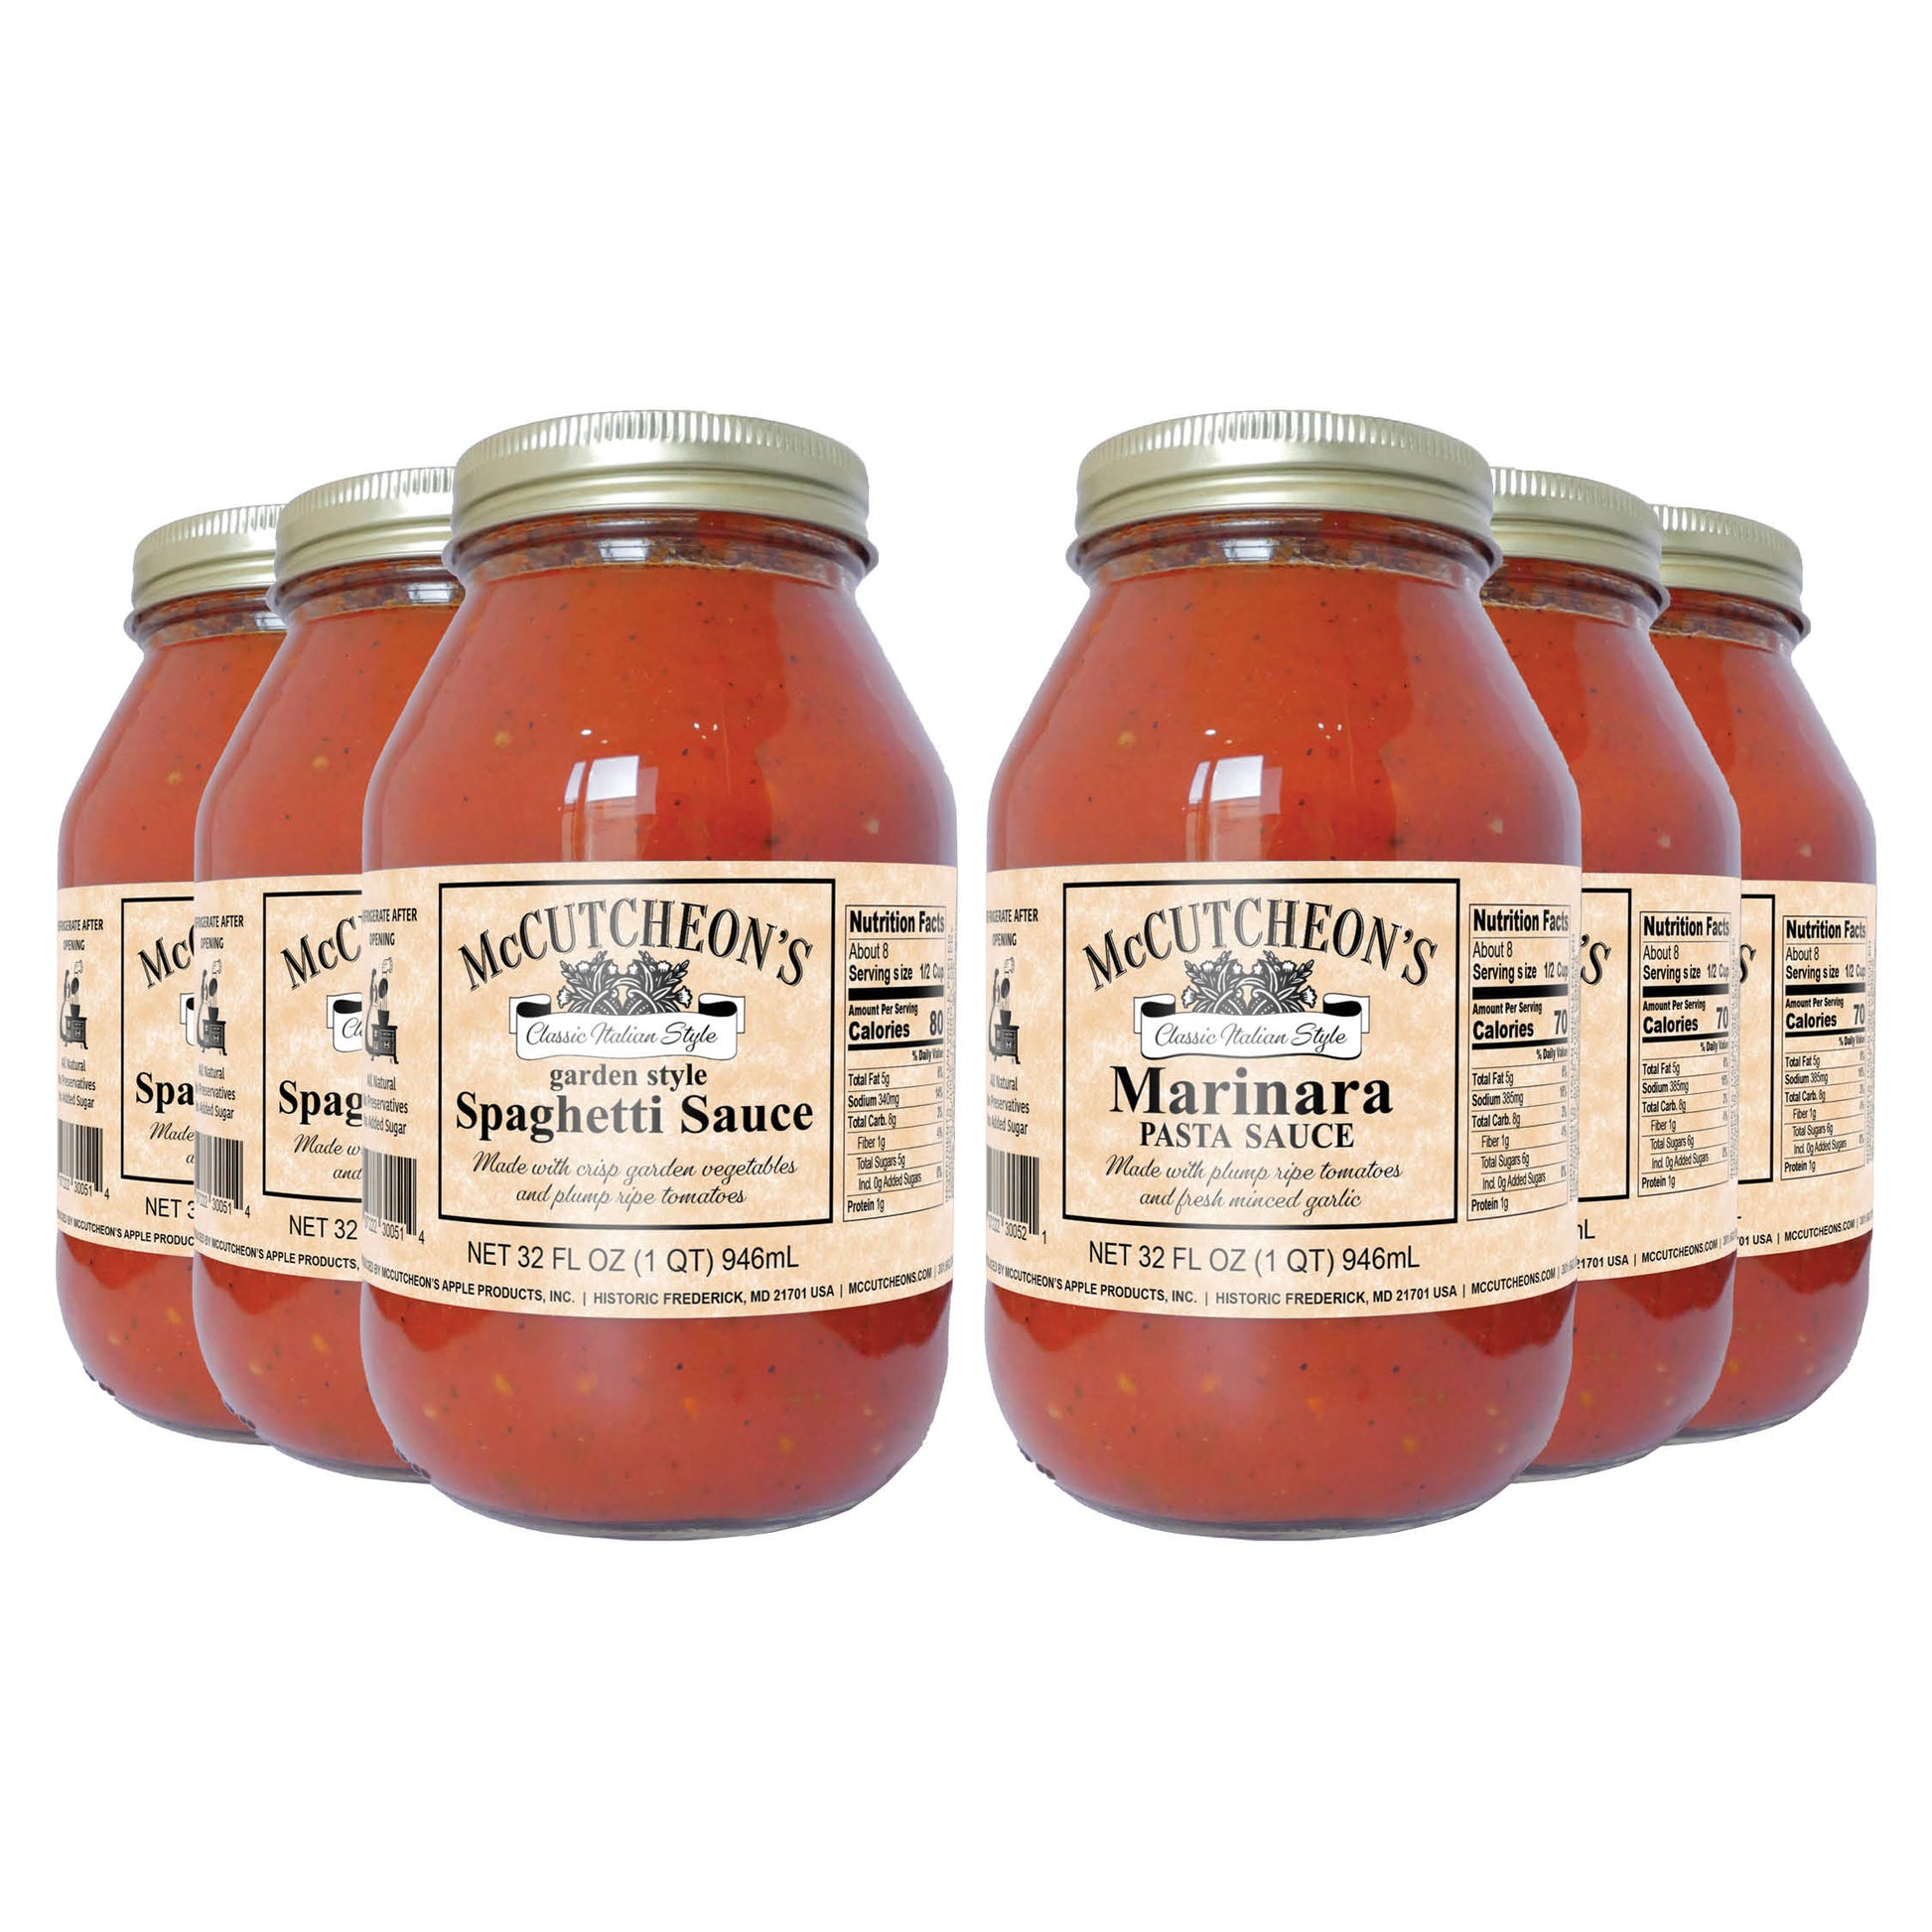 6 quart jars bundle of McCutcheon's spaghetti and marinara sauce